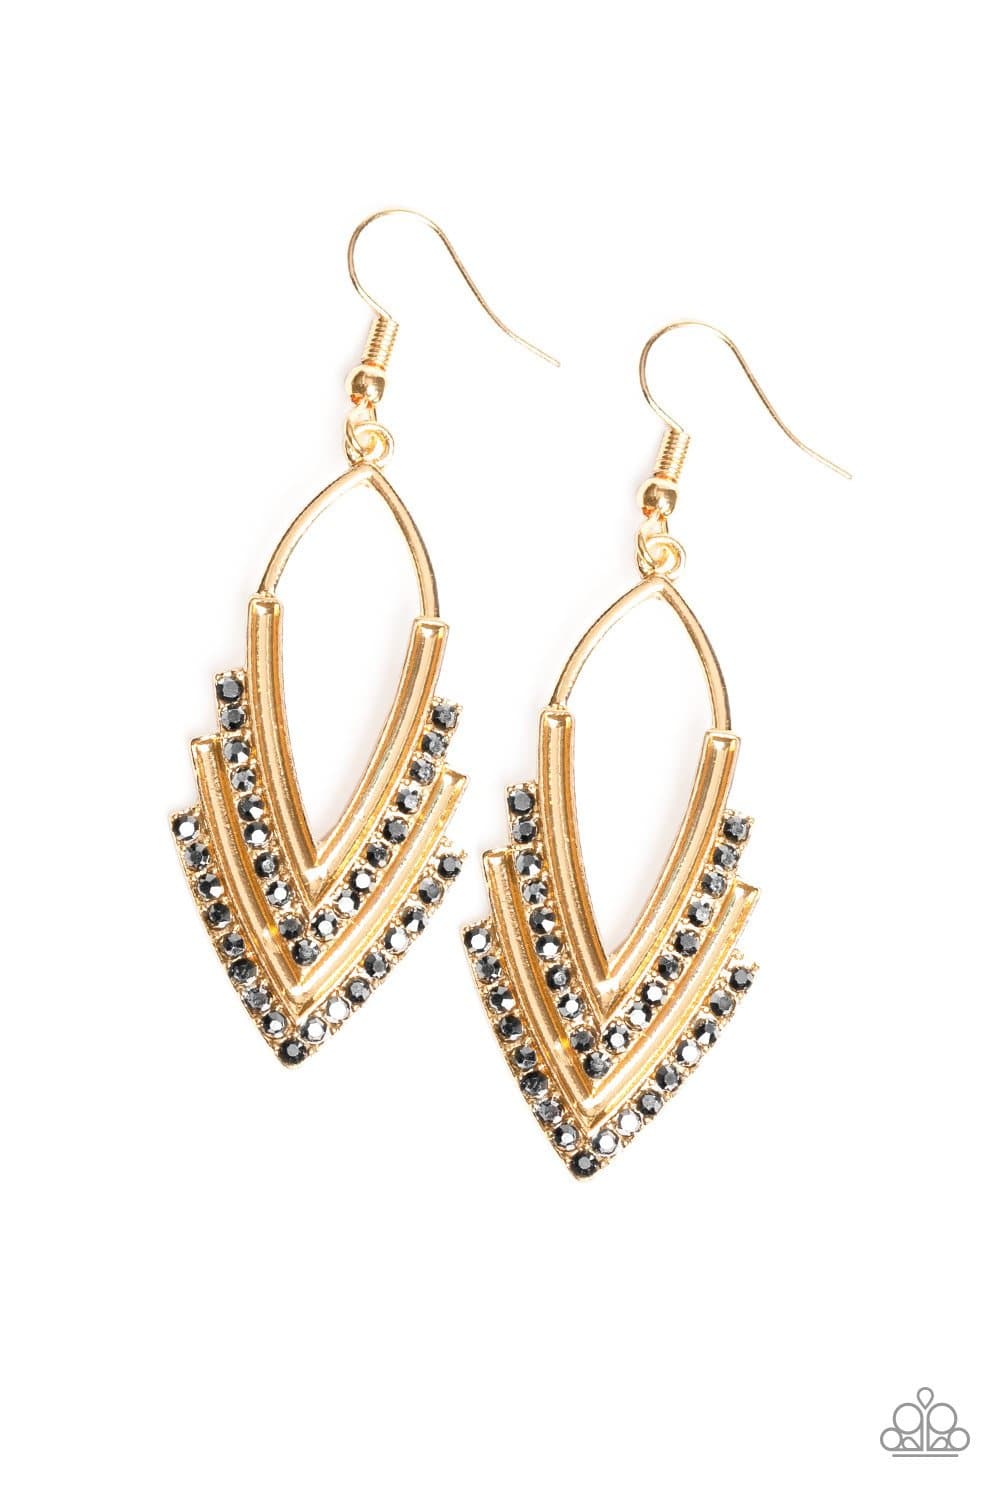 Tour de Force - Gold Rhinestone Earrings - Paparazzi Accessories - GlaMarous Titi Jewels